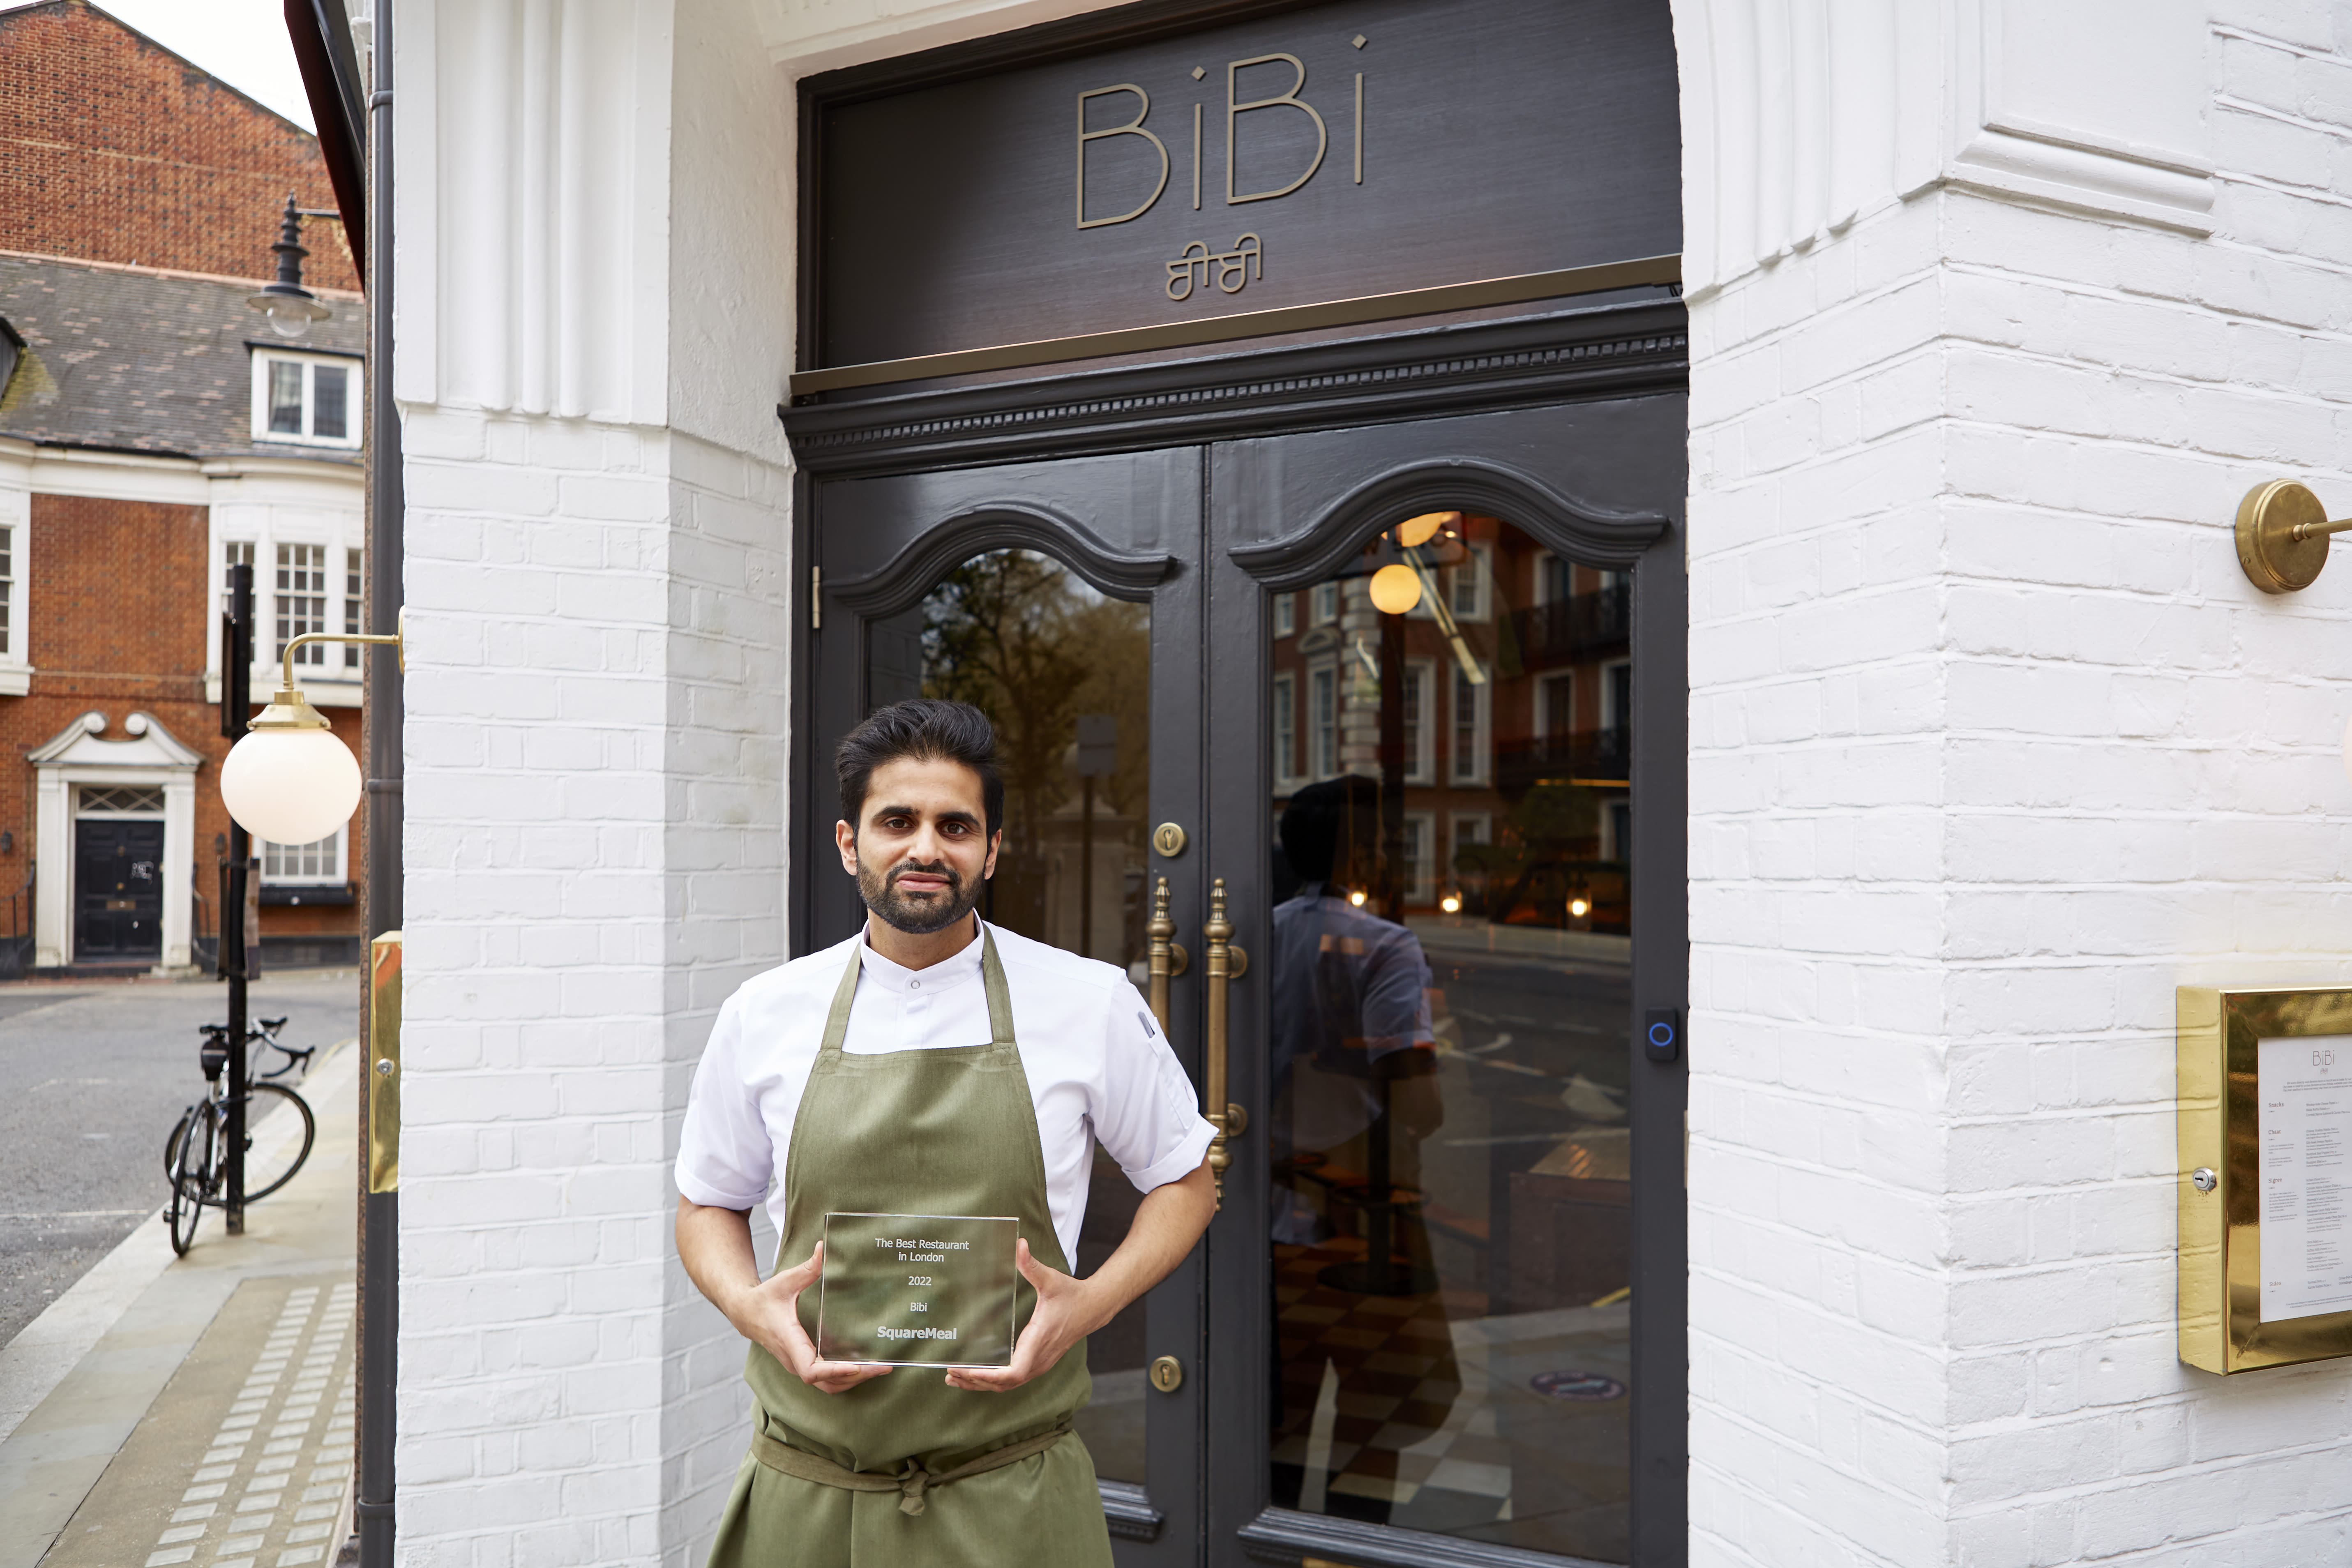 Image of BiBi chef, Chet Sharma, standing outside the BiBi restaurant in London.